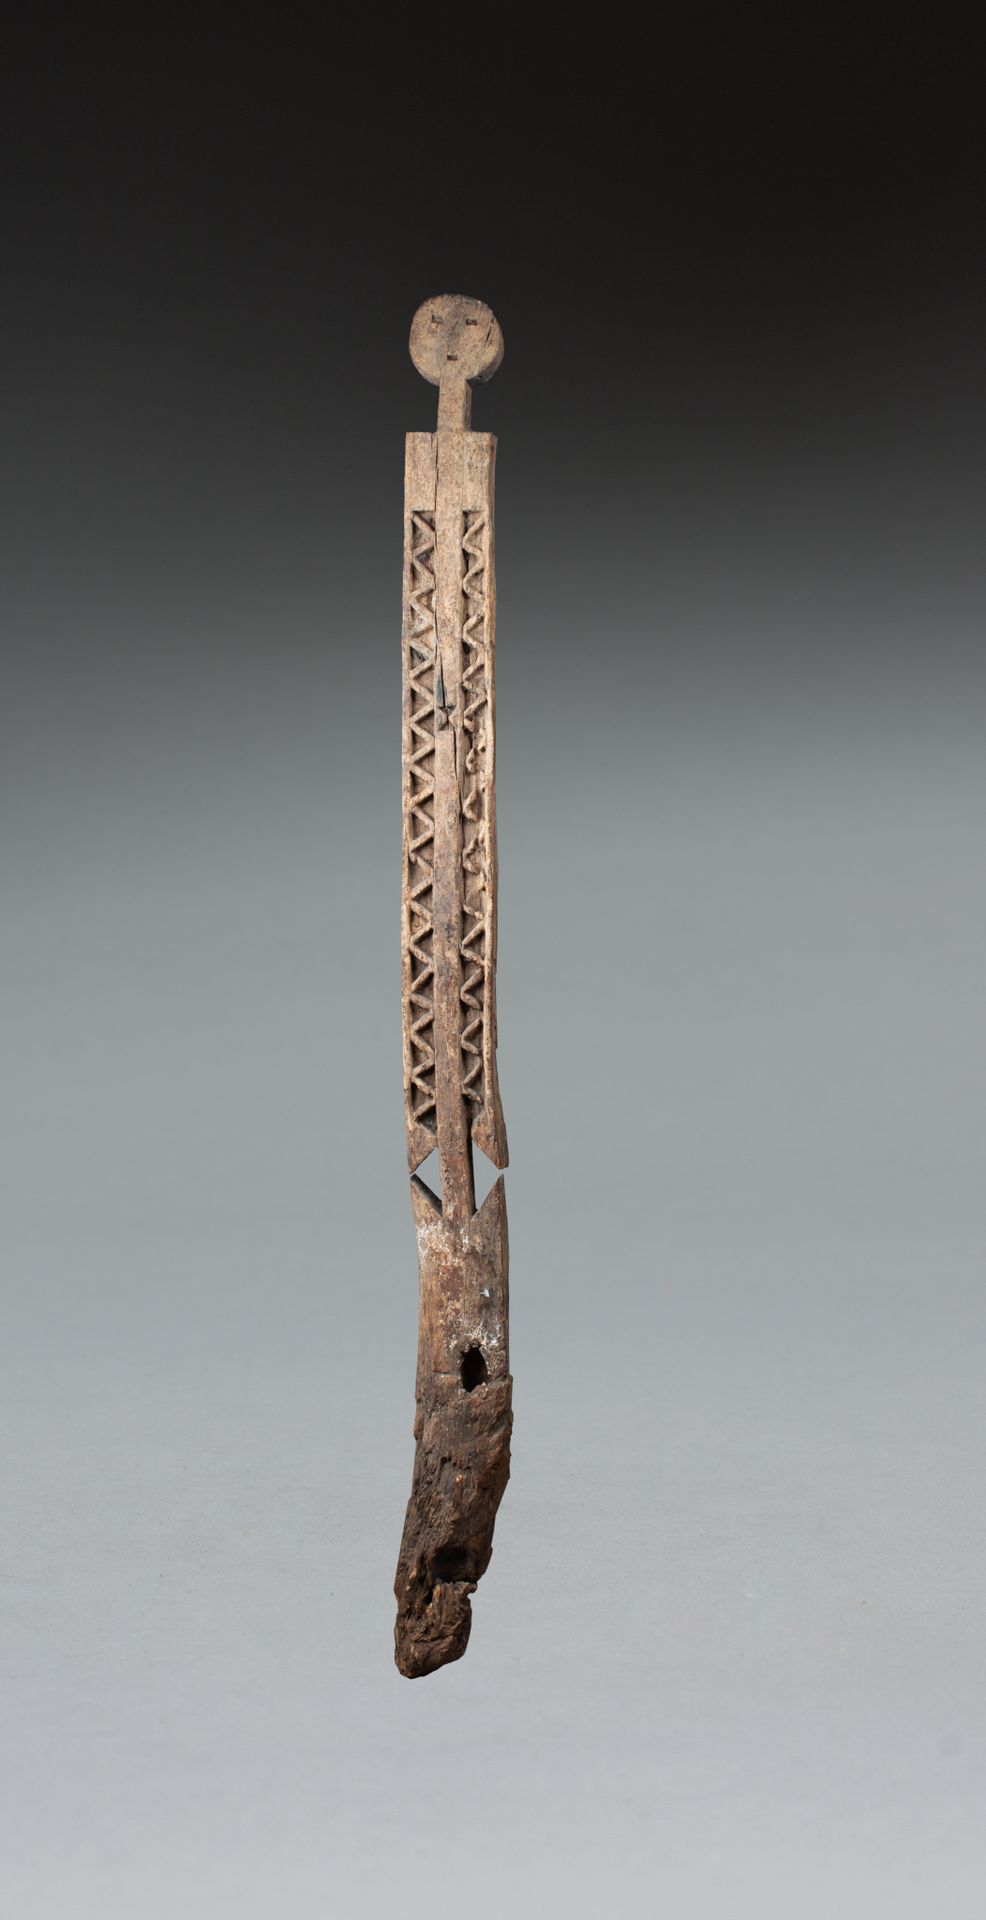 Poteau cultuel 象征着一个重要的祖先，具有美丽的风格化和图解化的形式。 

硬木，由时间和风化造成的古老侵蚀

吉拉亚马，肯尼亚，19世纪末-20&hellip;